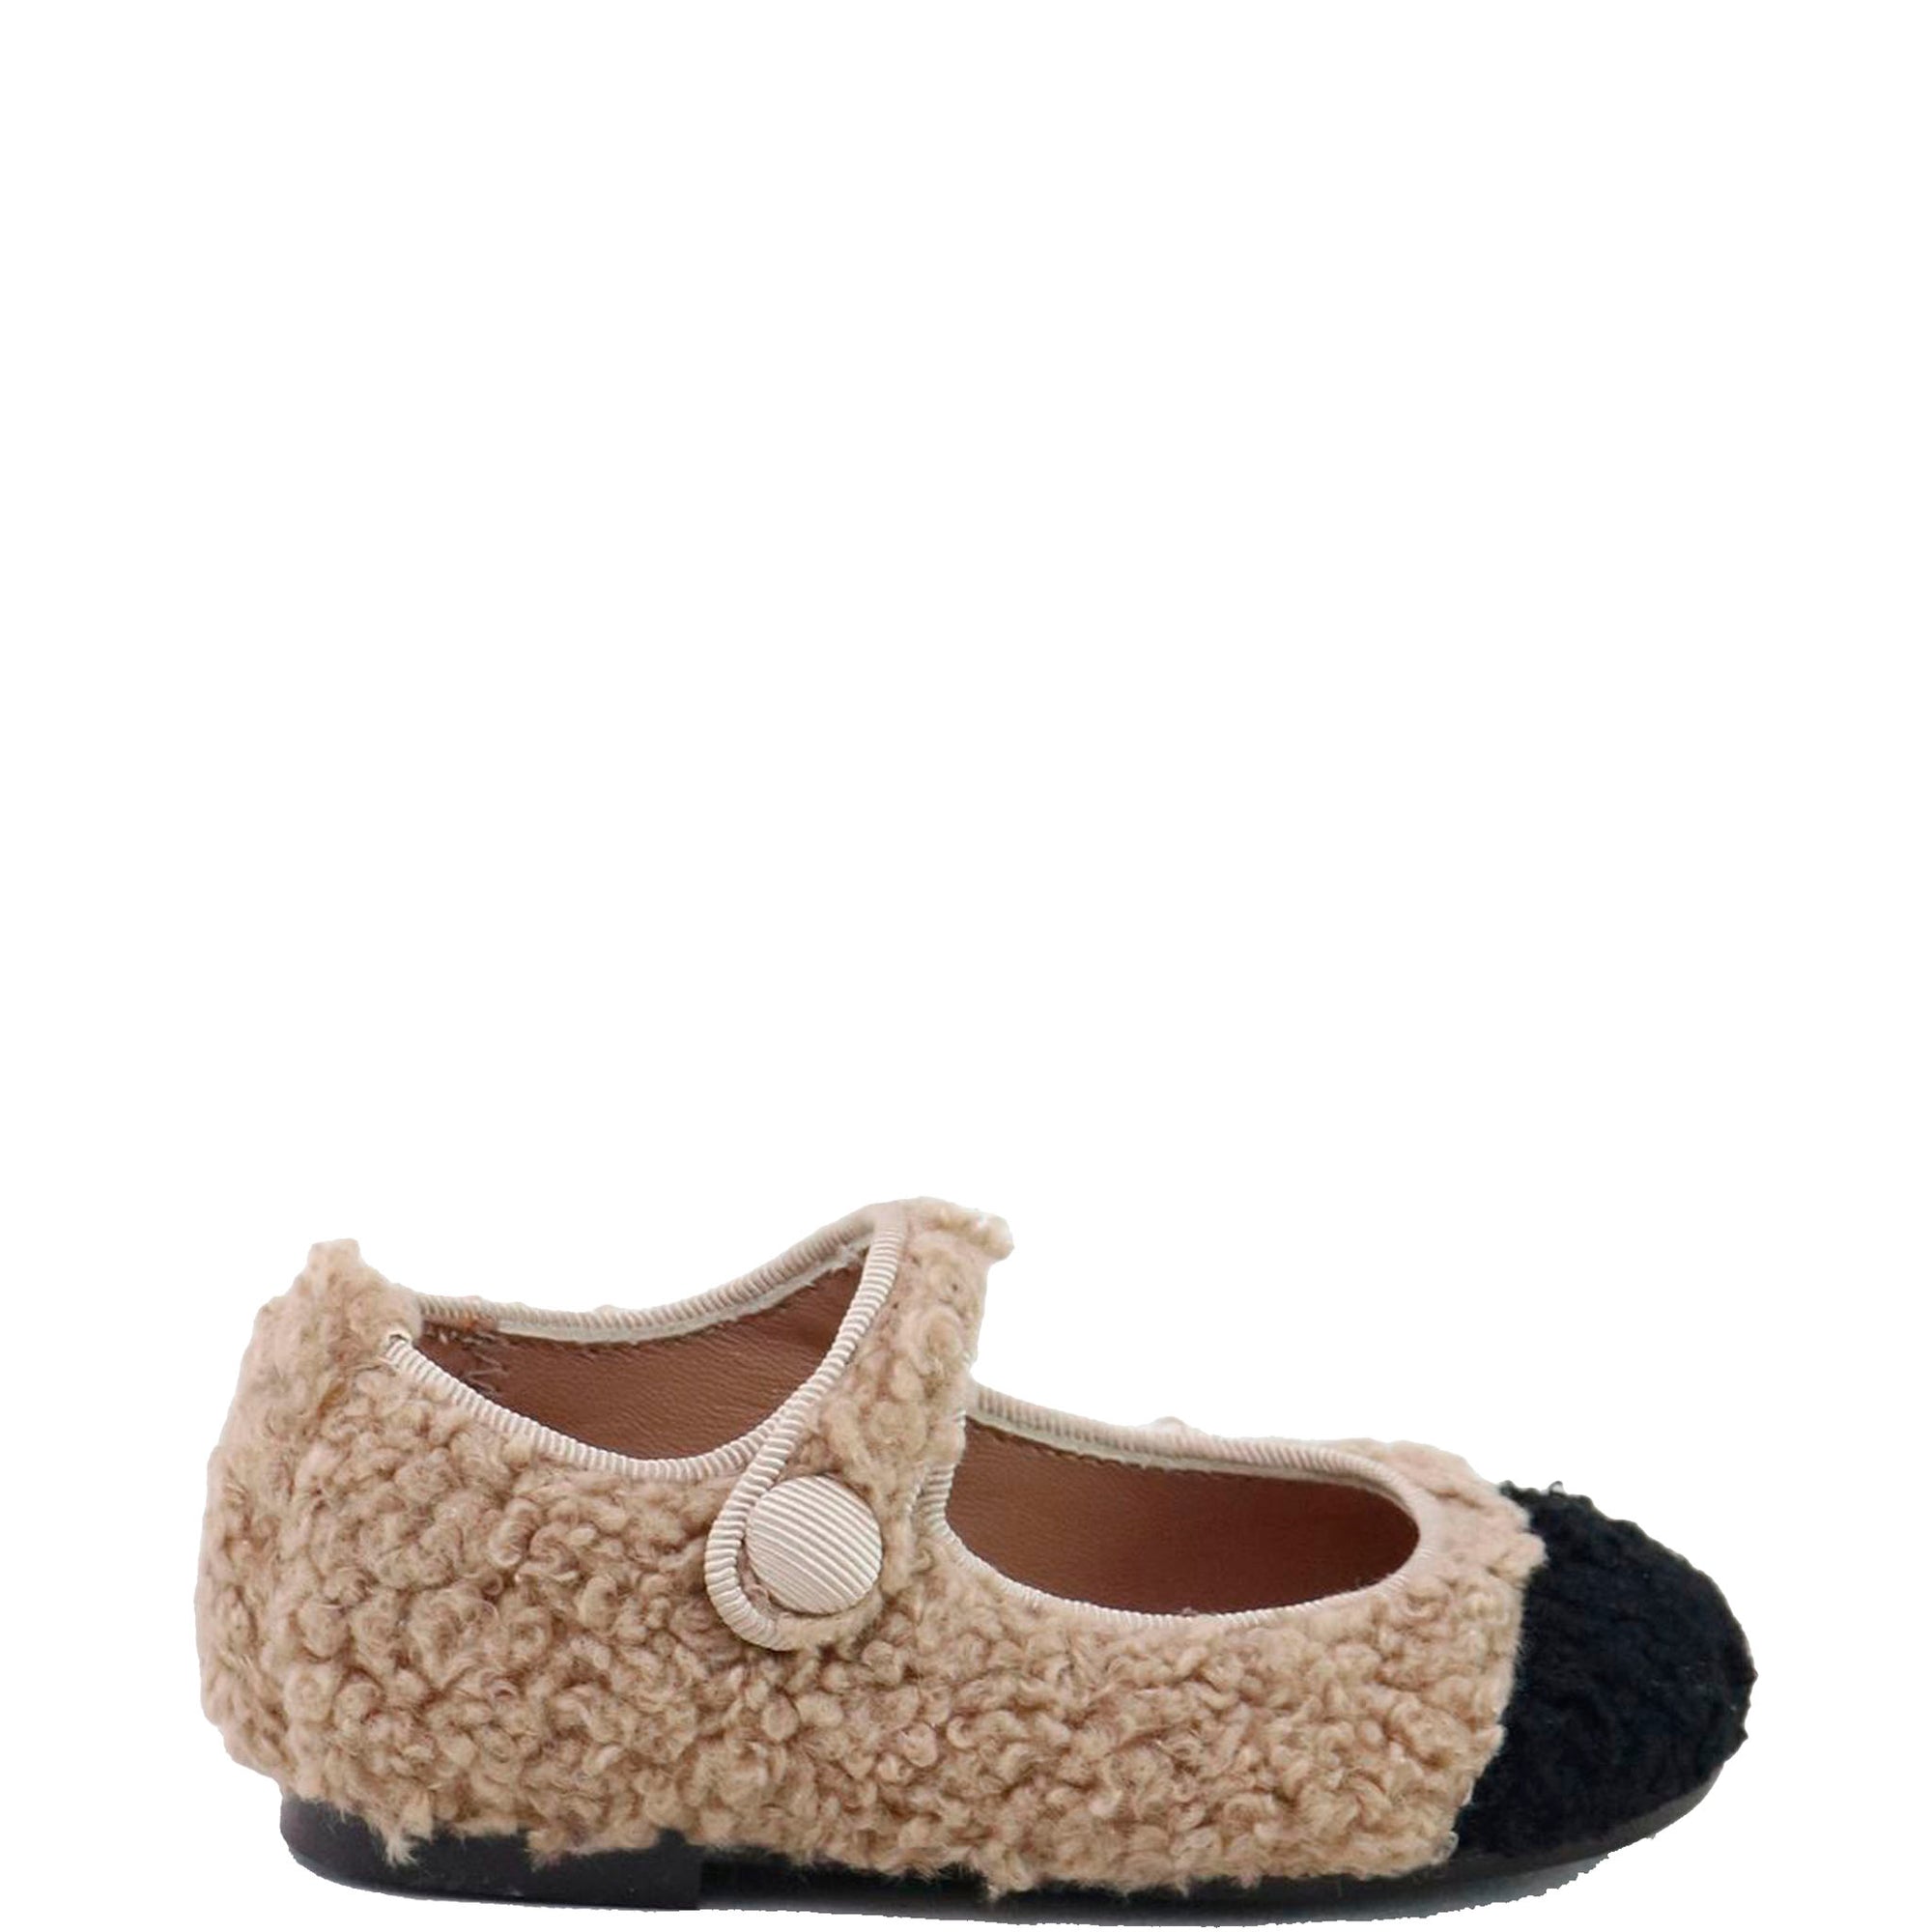 Papanatas Camel and Black Shearling Captoe Mary Jane-Tassel Children Shoes